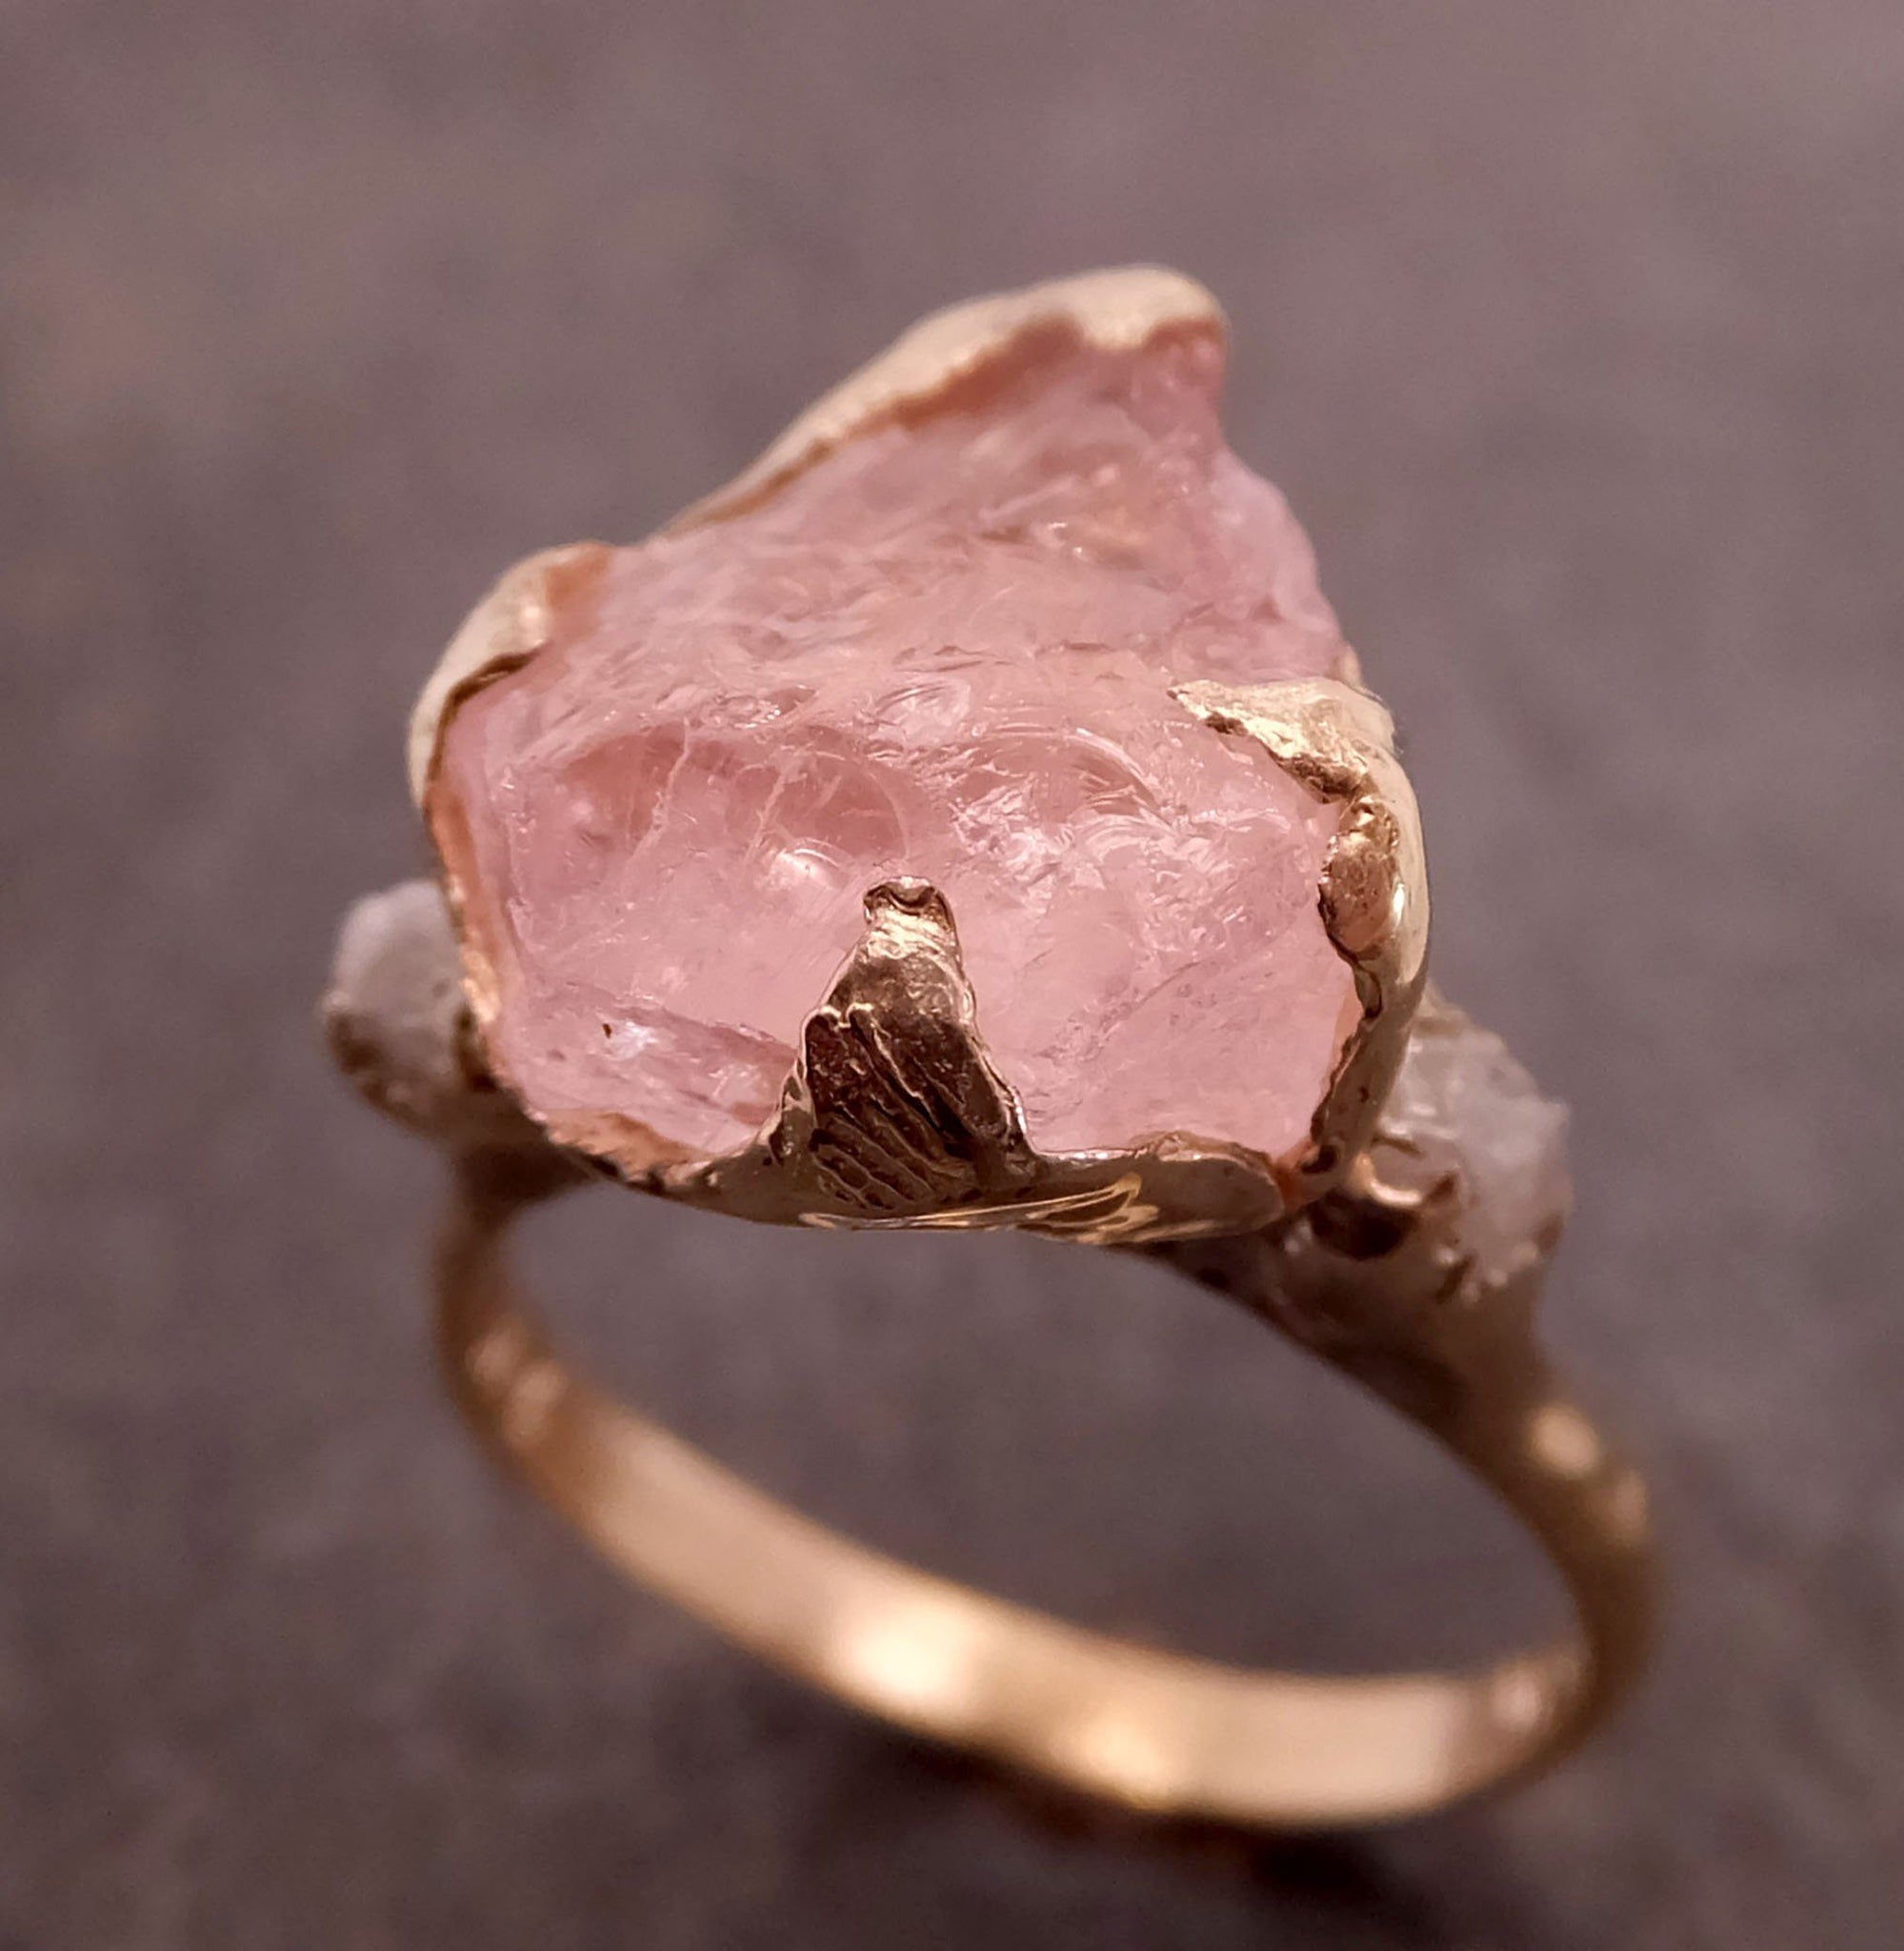 morganite raw uncut diamond yellow 14k gold engagement ring multi stone wedding ring custom one of a kind gemstone bespoke byangeline 2101 Alternative Engagement